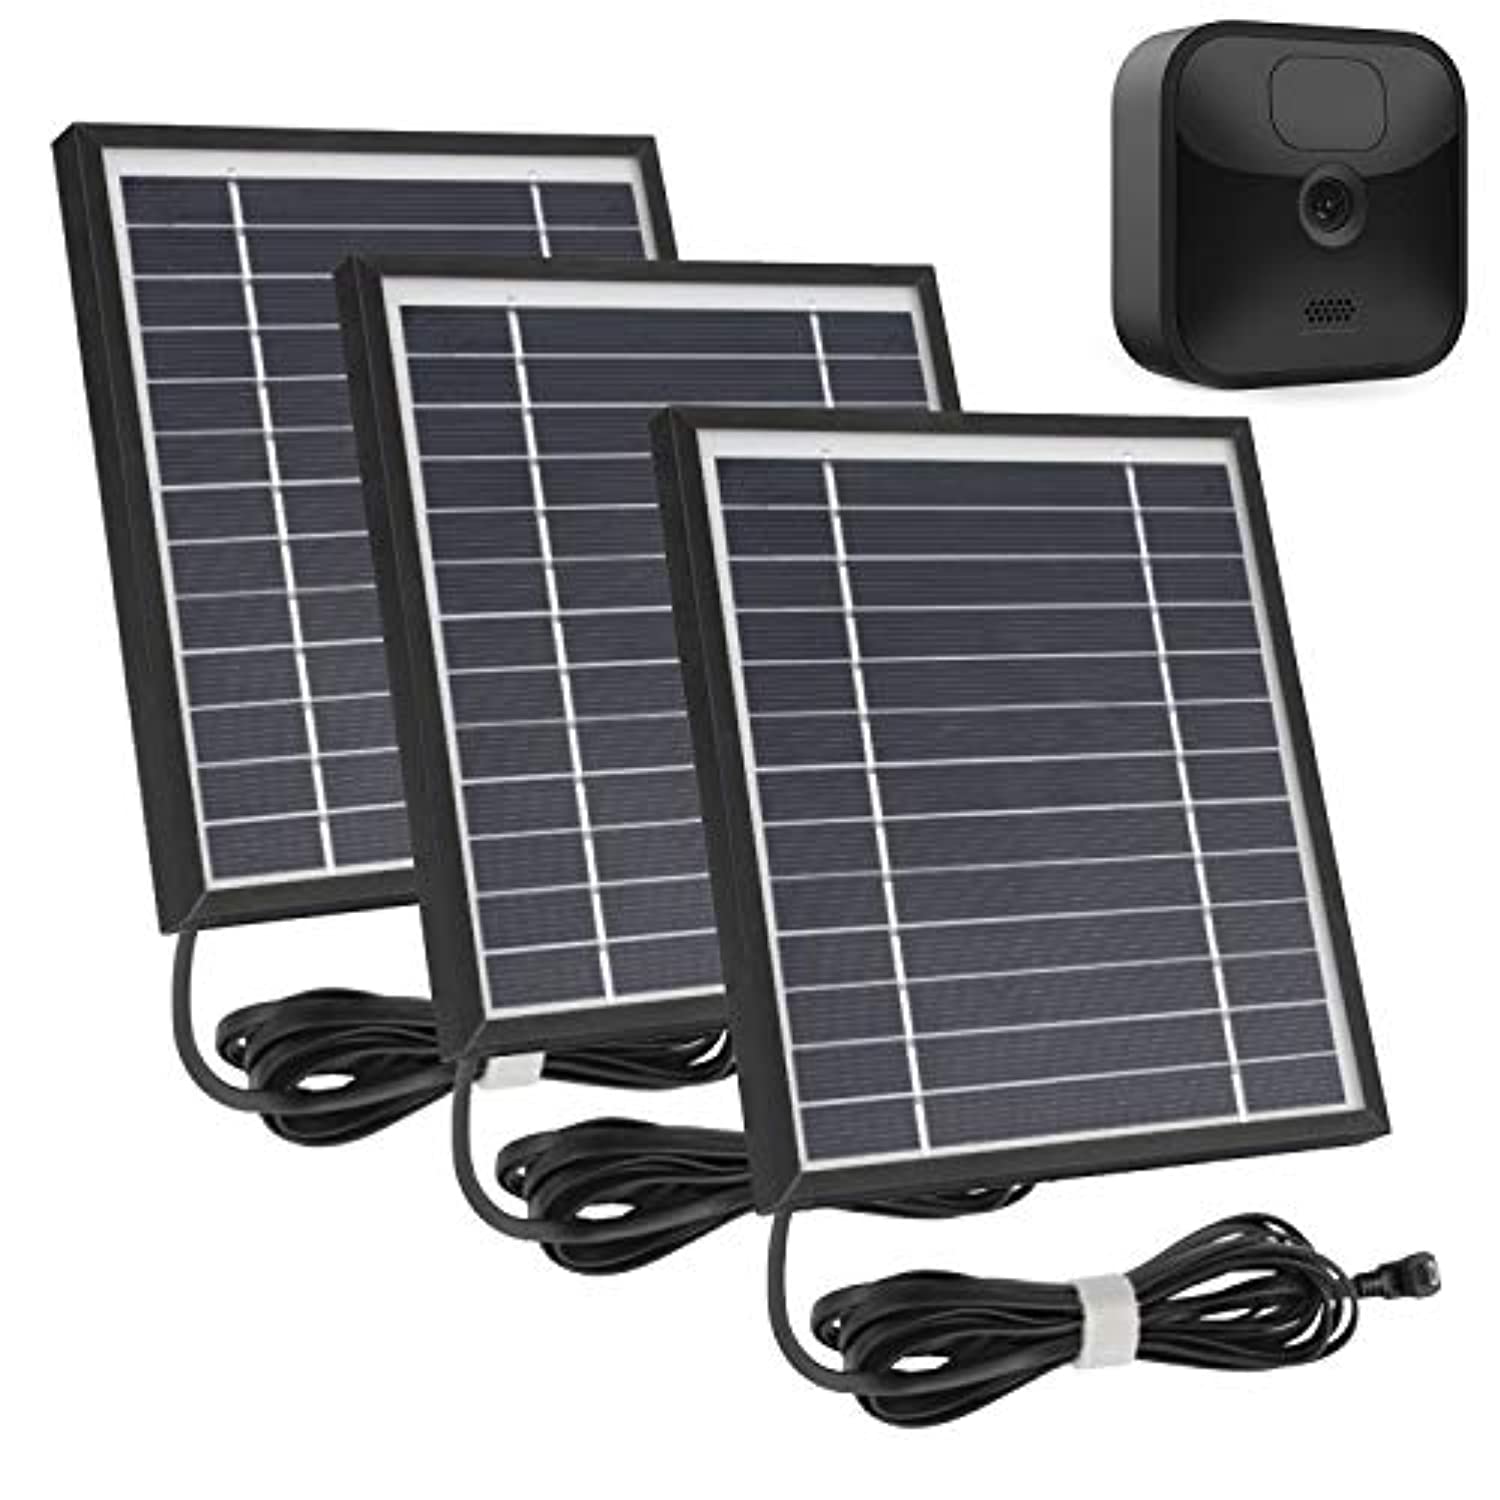 Blink Outdoor Camera Plus Solar Panel Charging Mount - Black